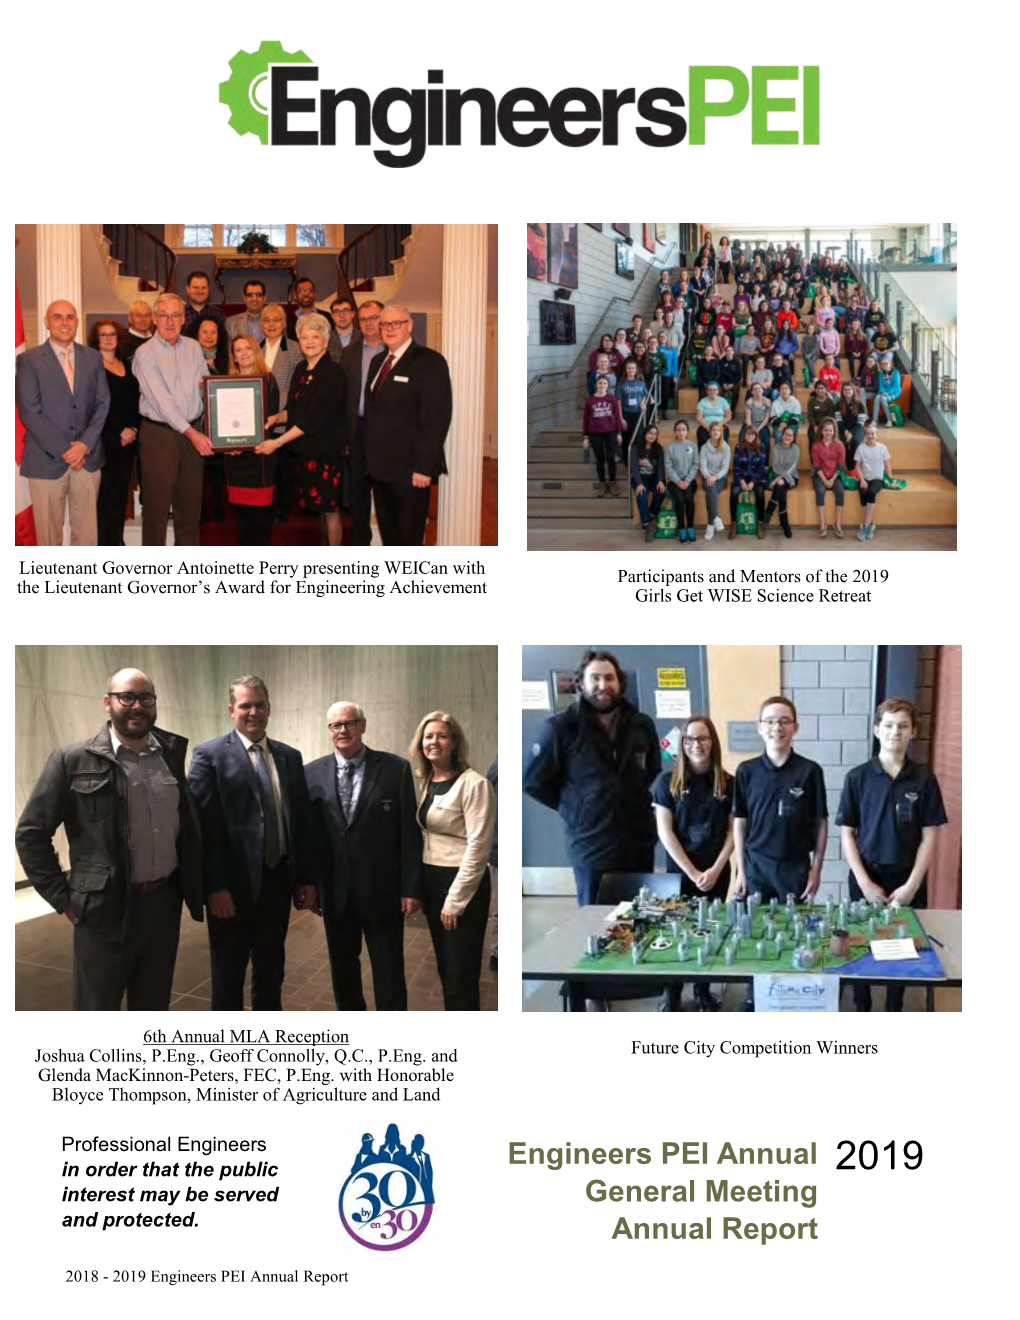 Engineers PEI Annual General Meeting Annual Report